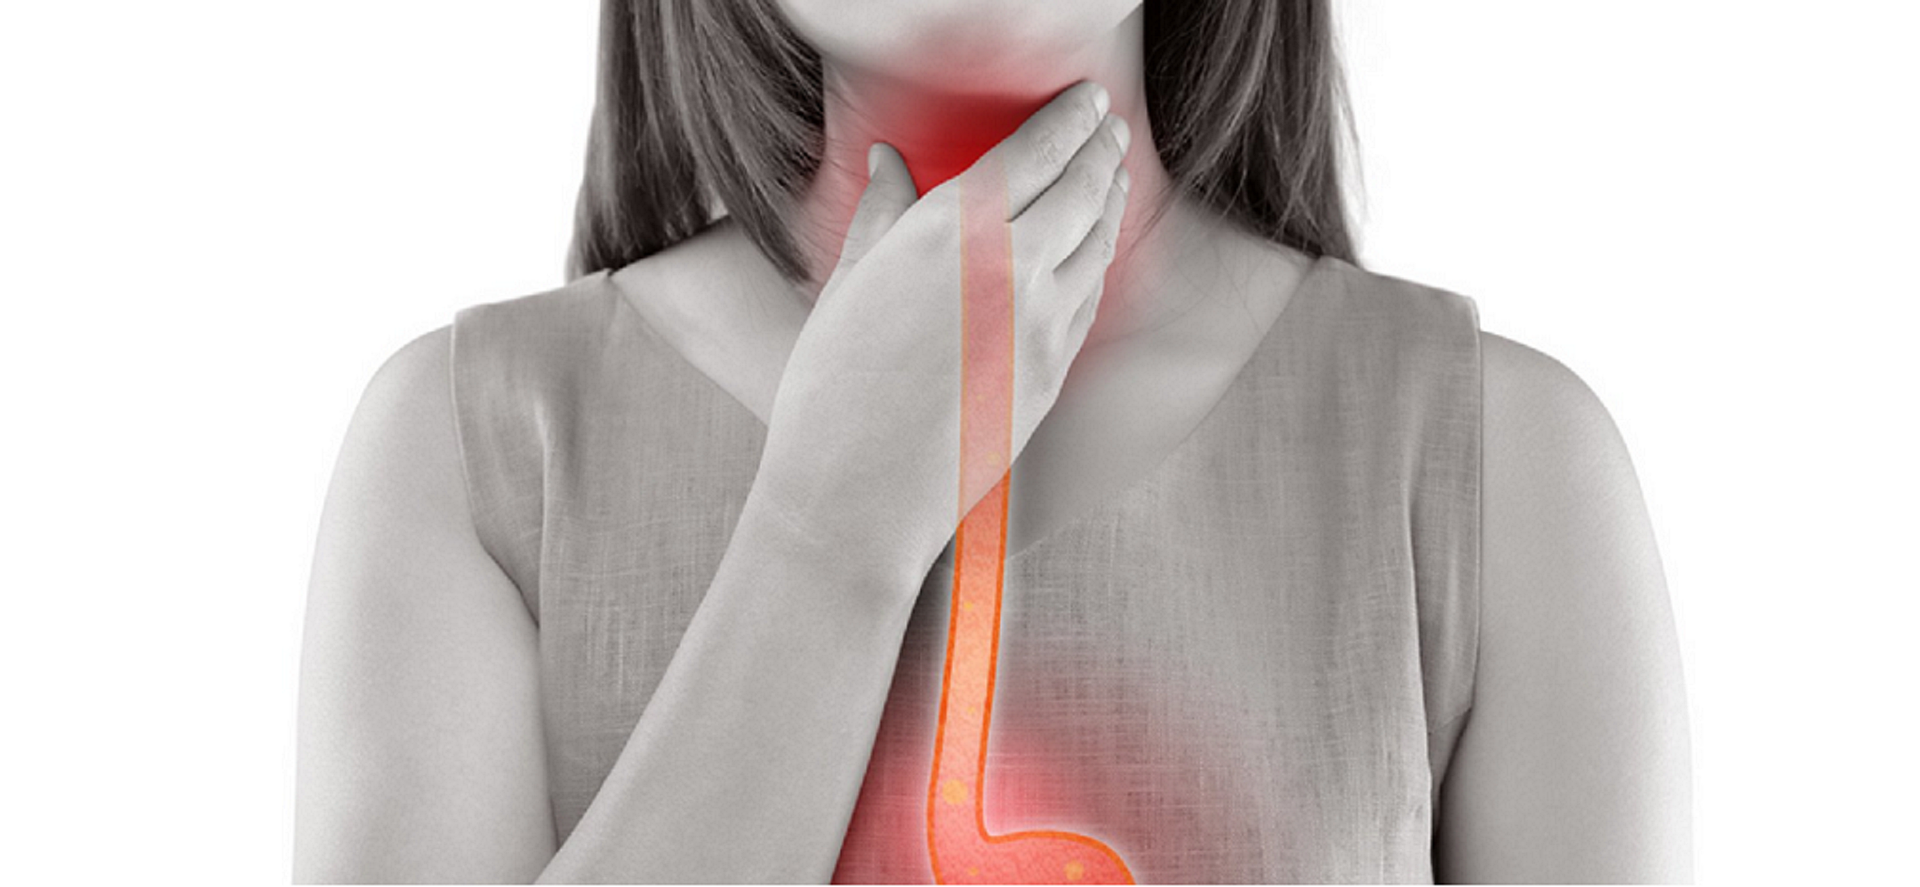 Lancet子刊：放疗对晚期<font color="red">食管癌</font>患者的吞咽困难无任何帮助！